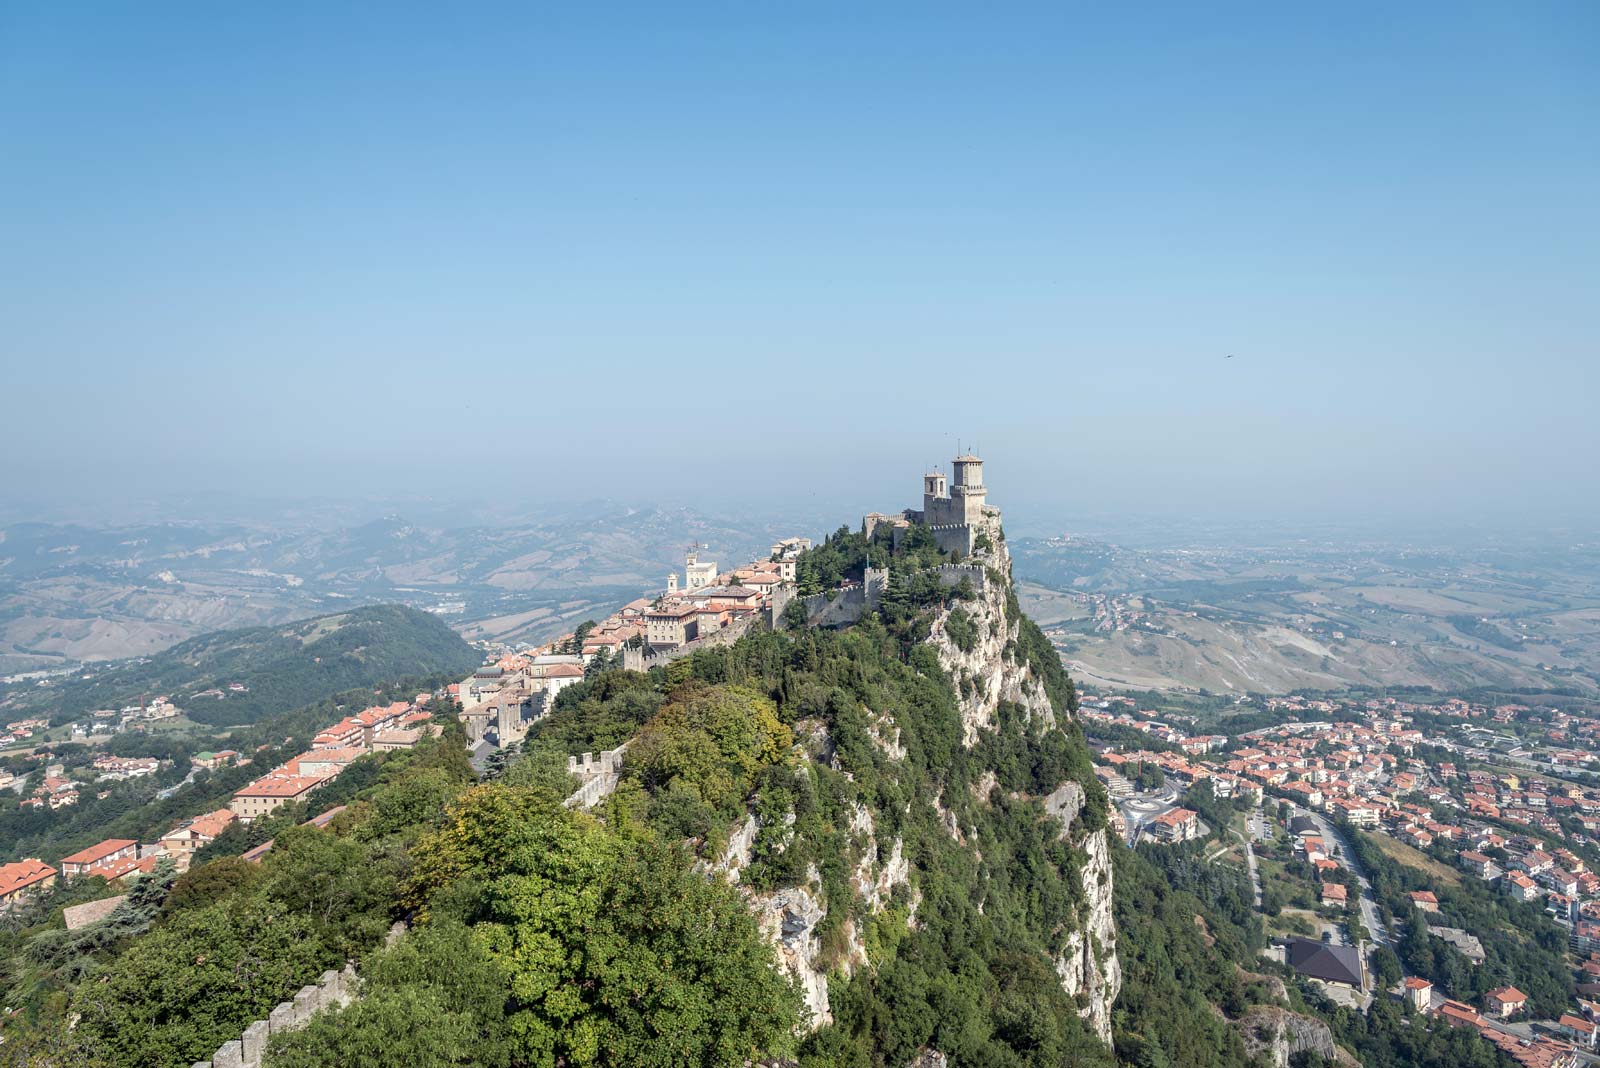 Highest peak of San Marino